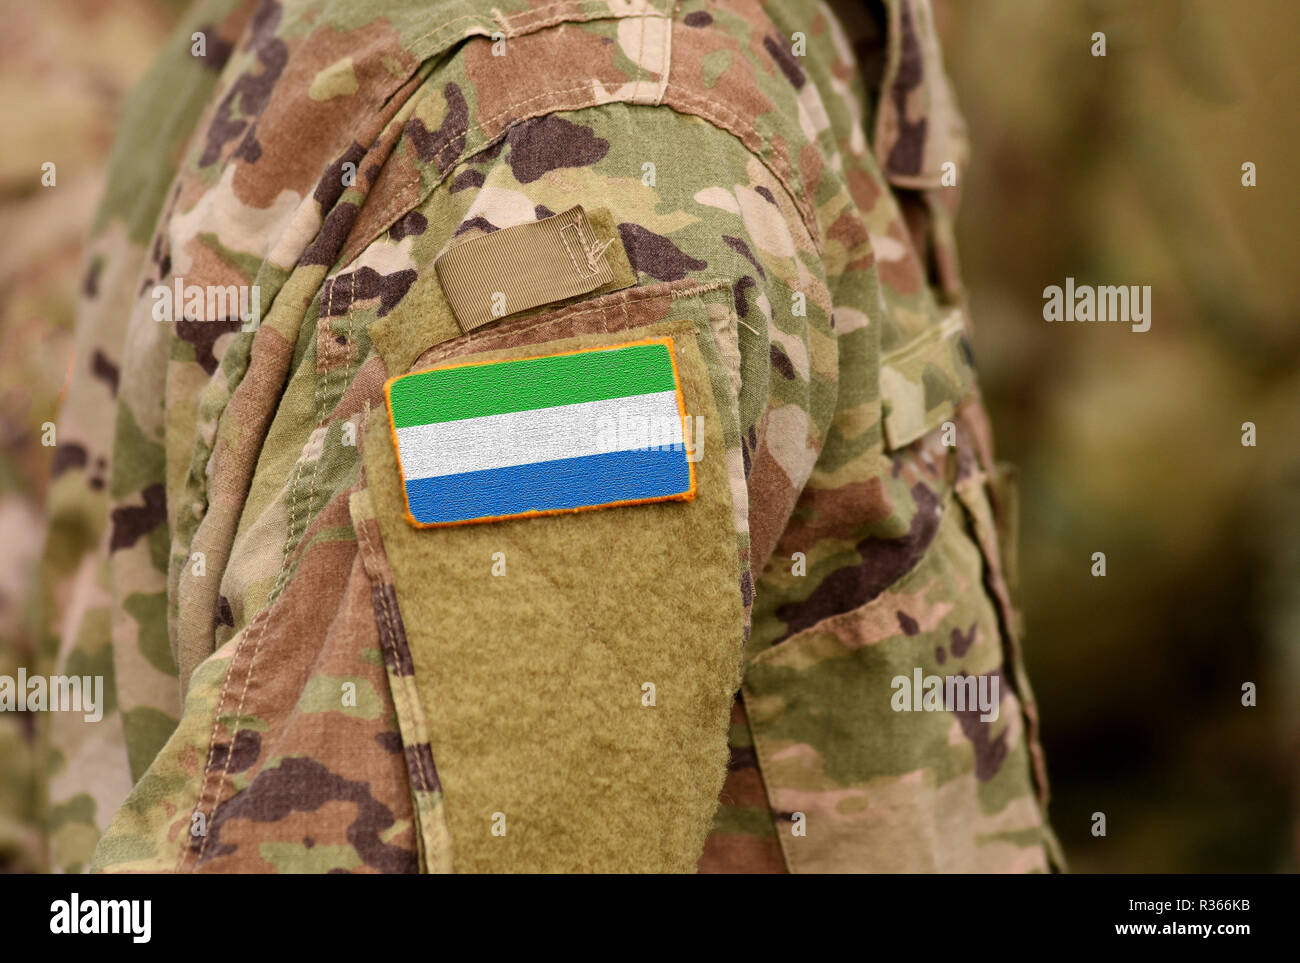 Sierra Leone flag on soldiers arm. Sierra Leone troops (collage) Stock Photo